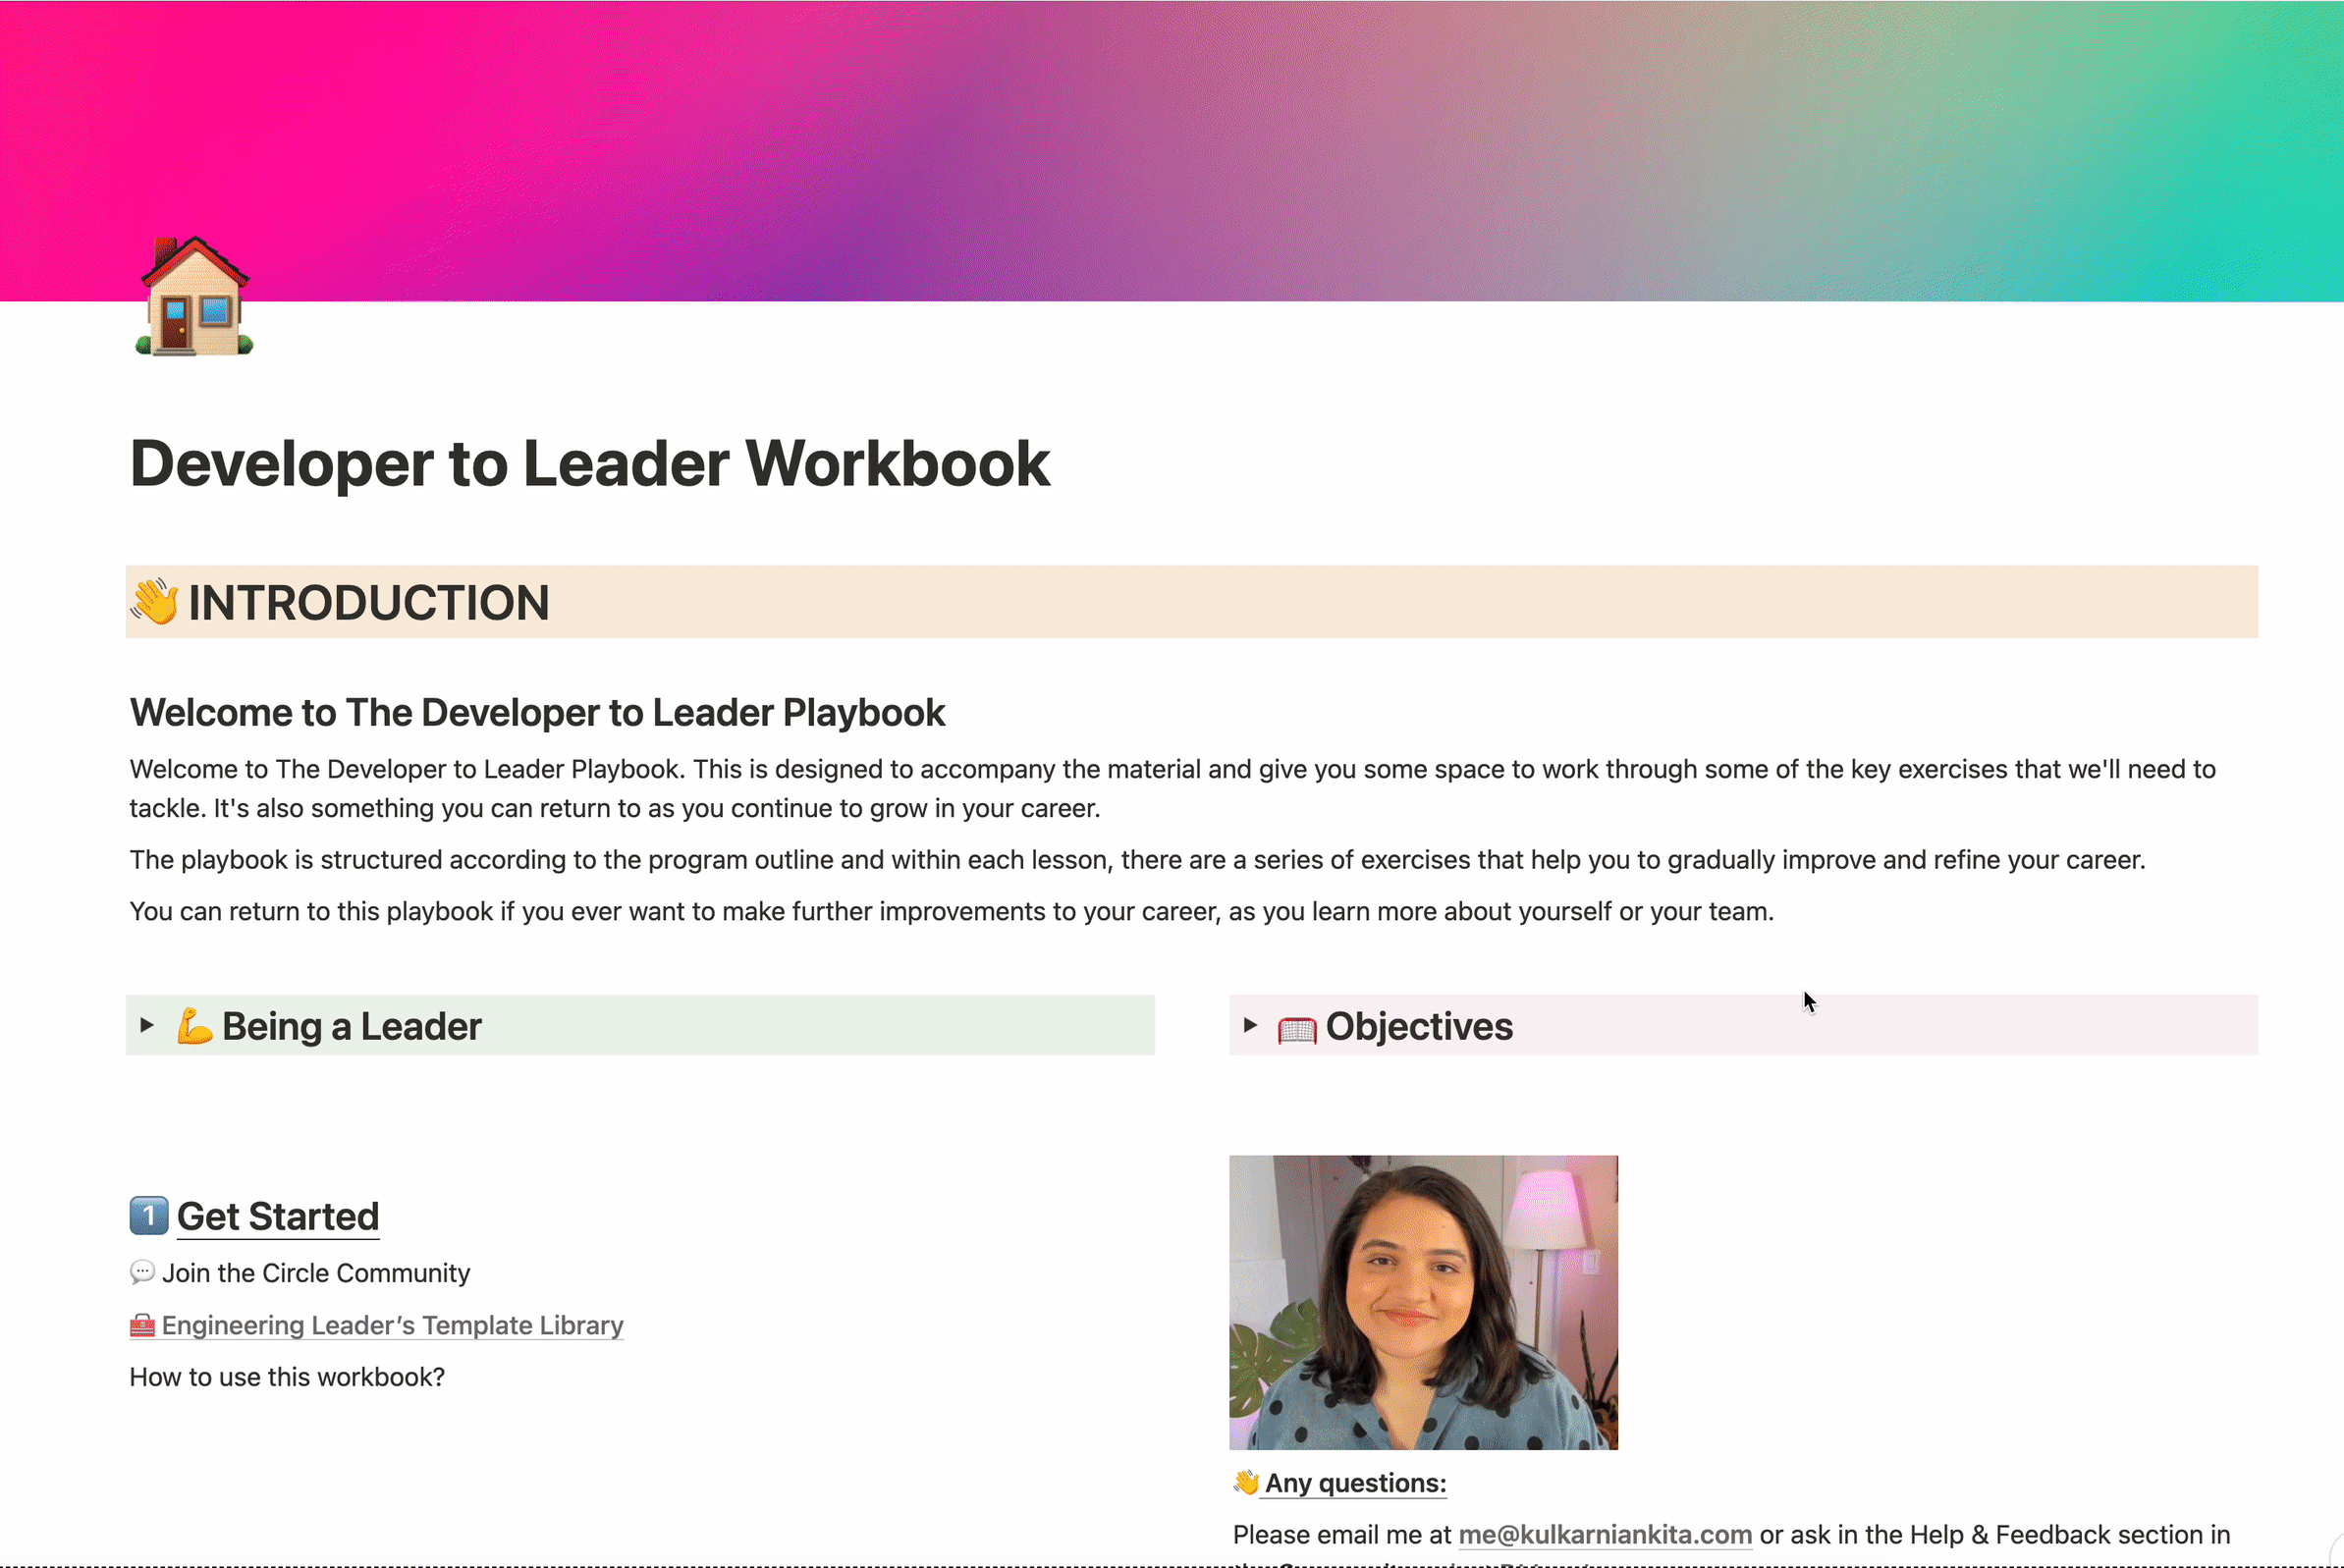 Workbook: Developer to Leader